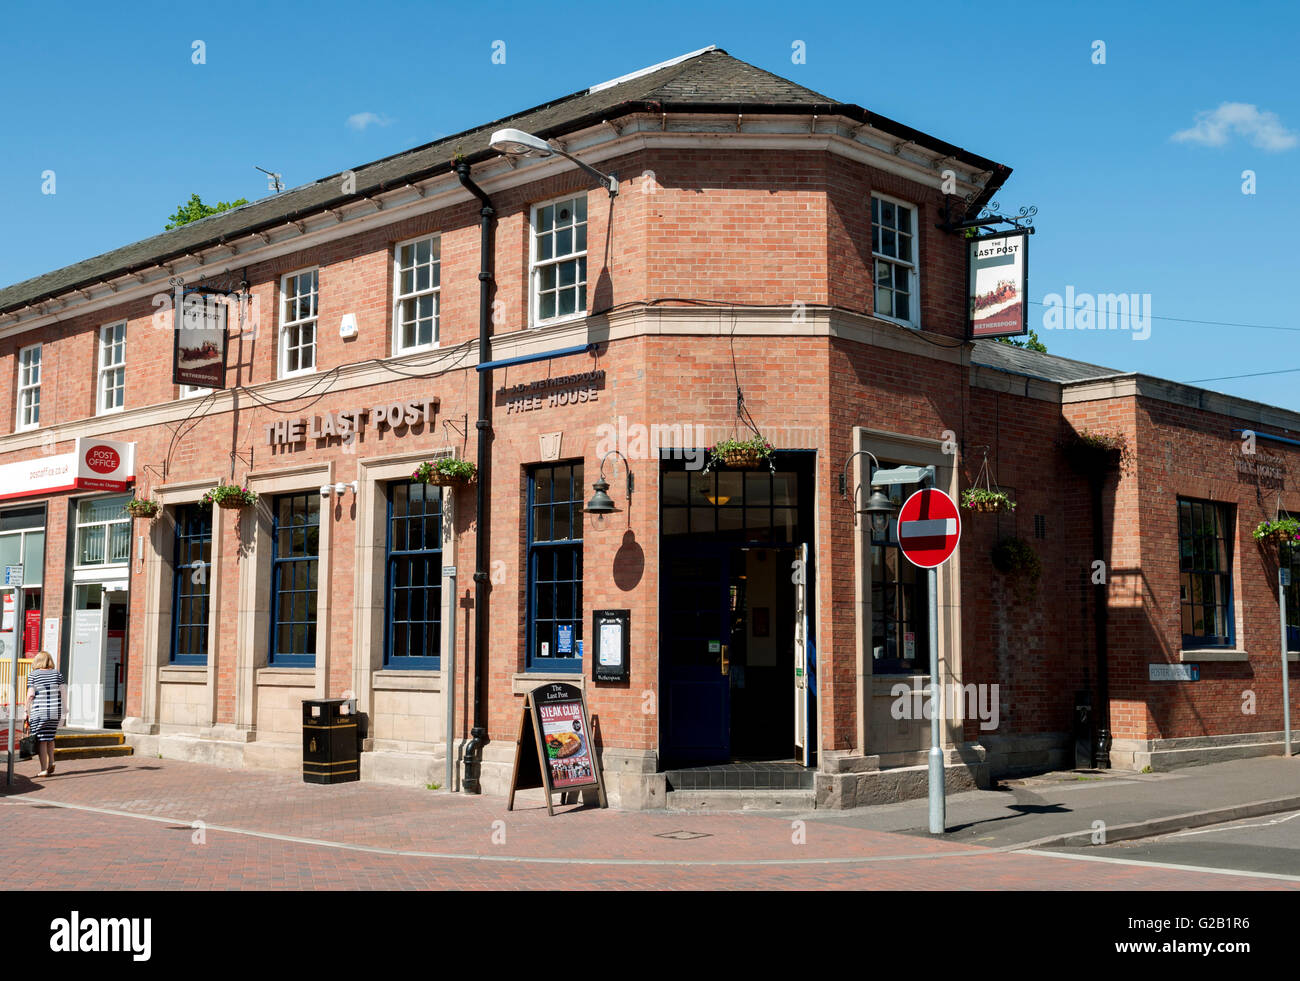 The Last Post pub, Beeston, Nottinghamshire, England, UK Stock Photo